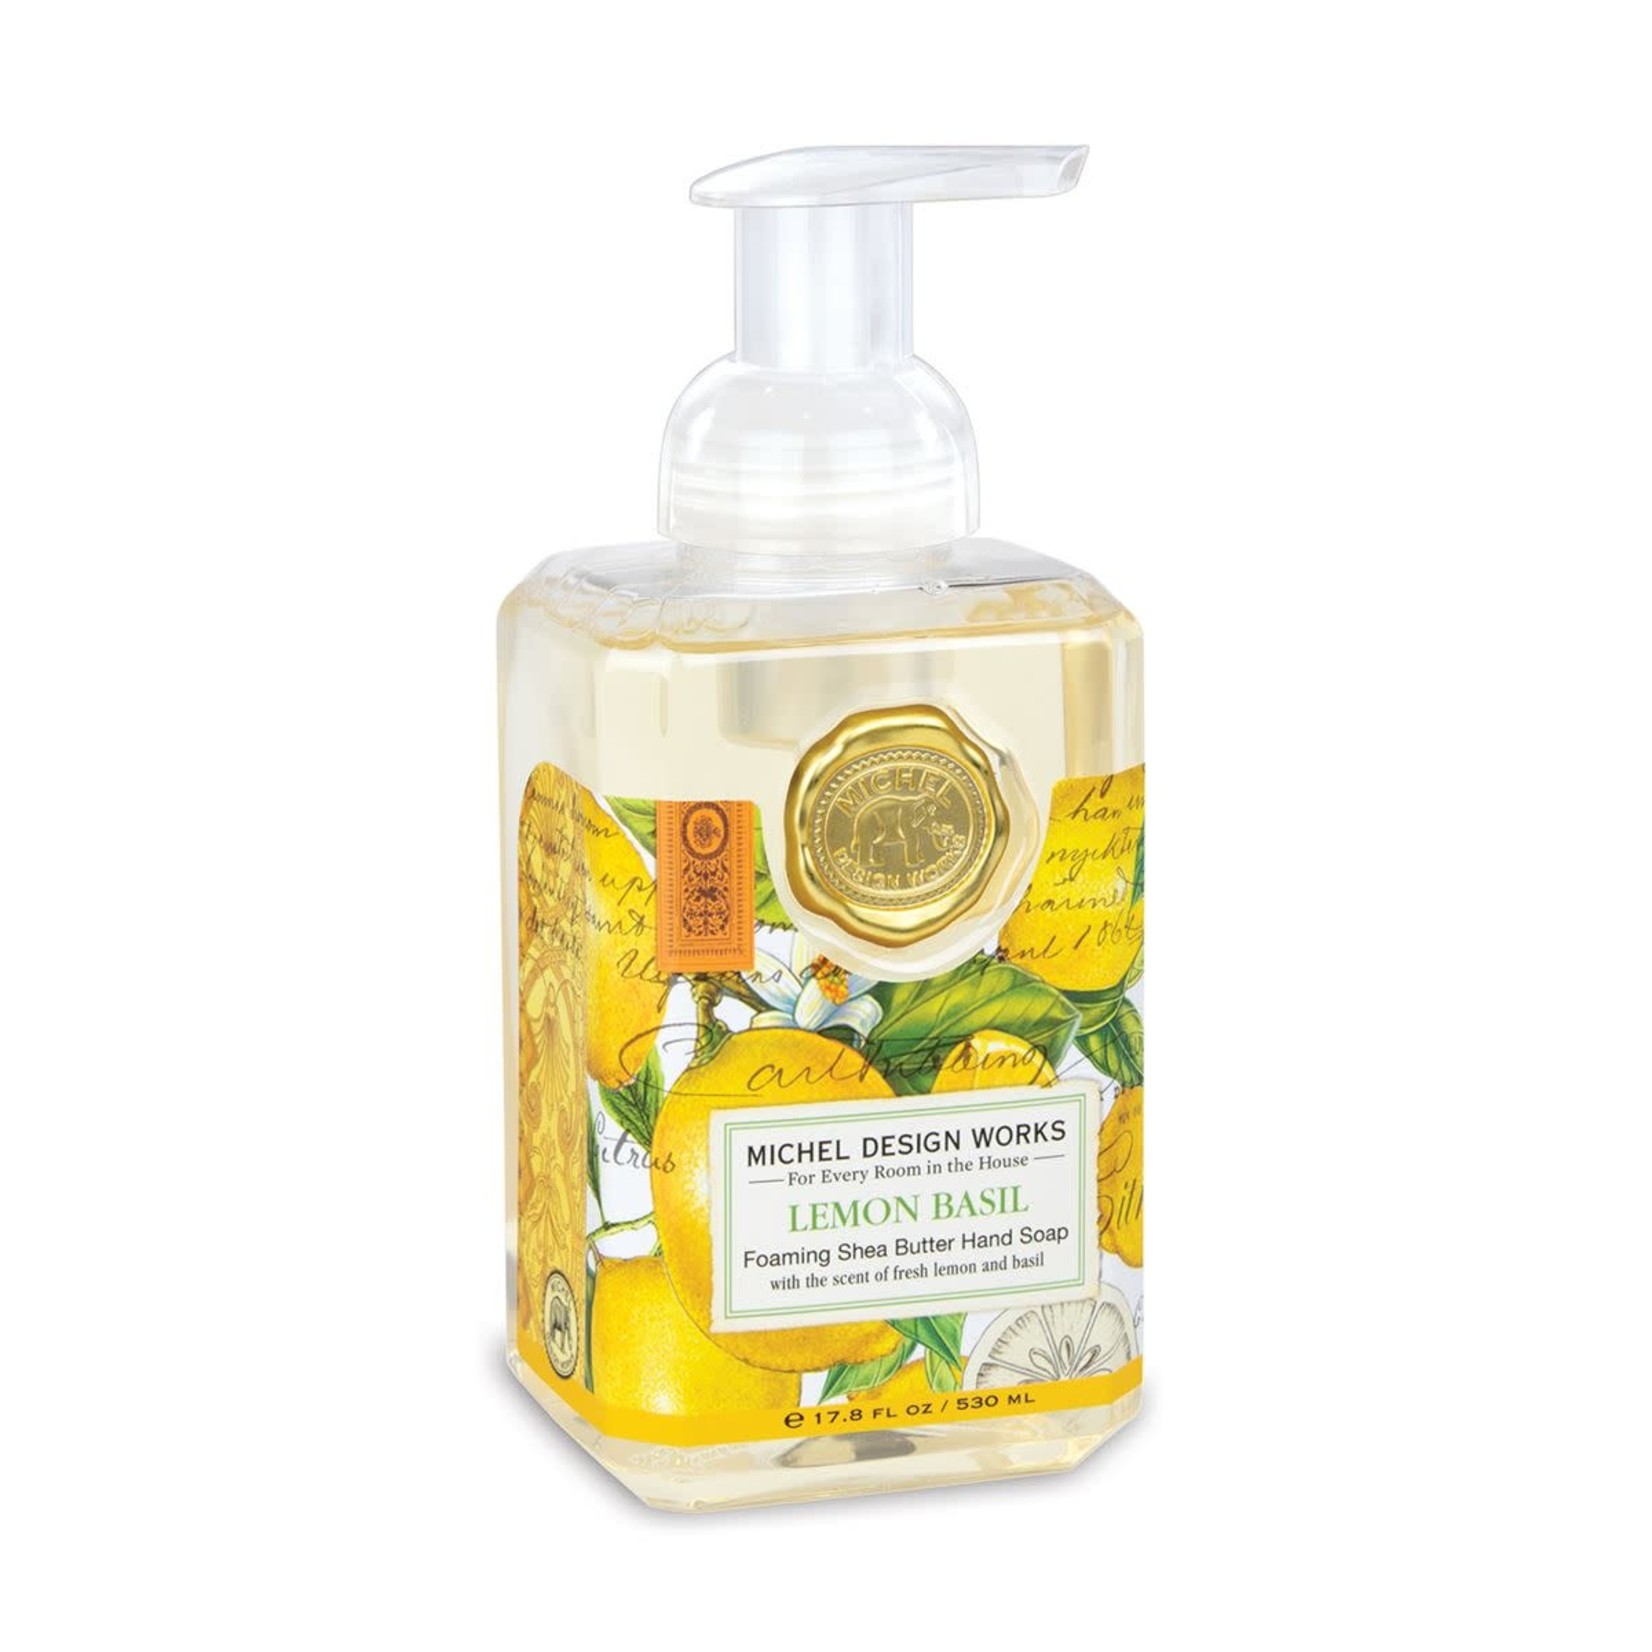 Lemon Basil Foaming Hand Soap 17.8 fl oz